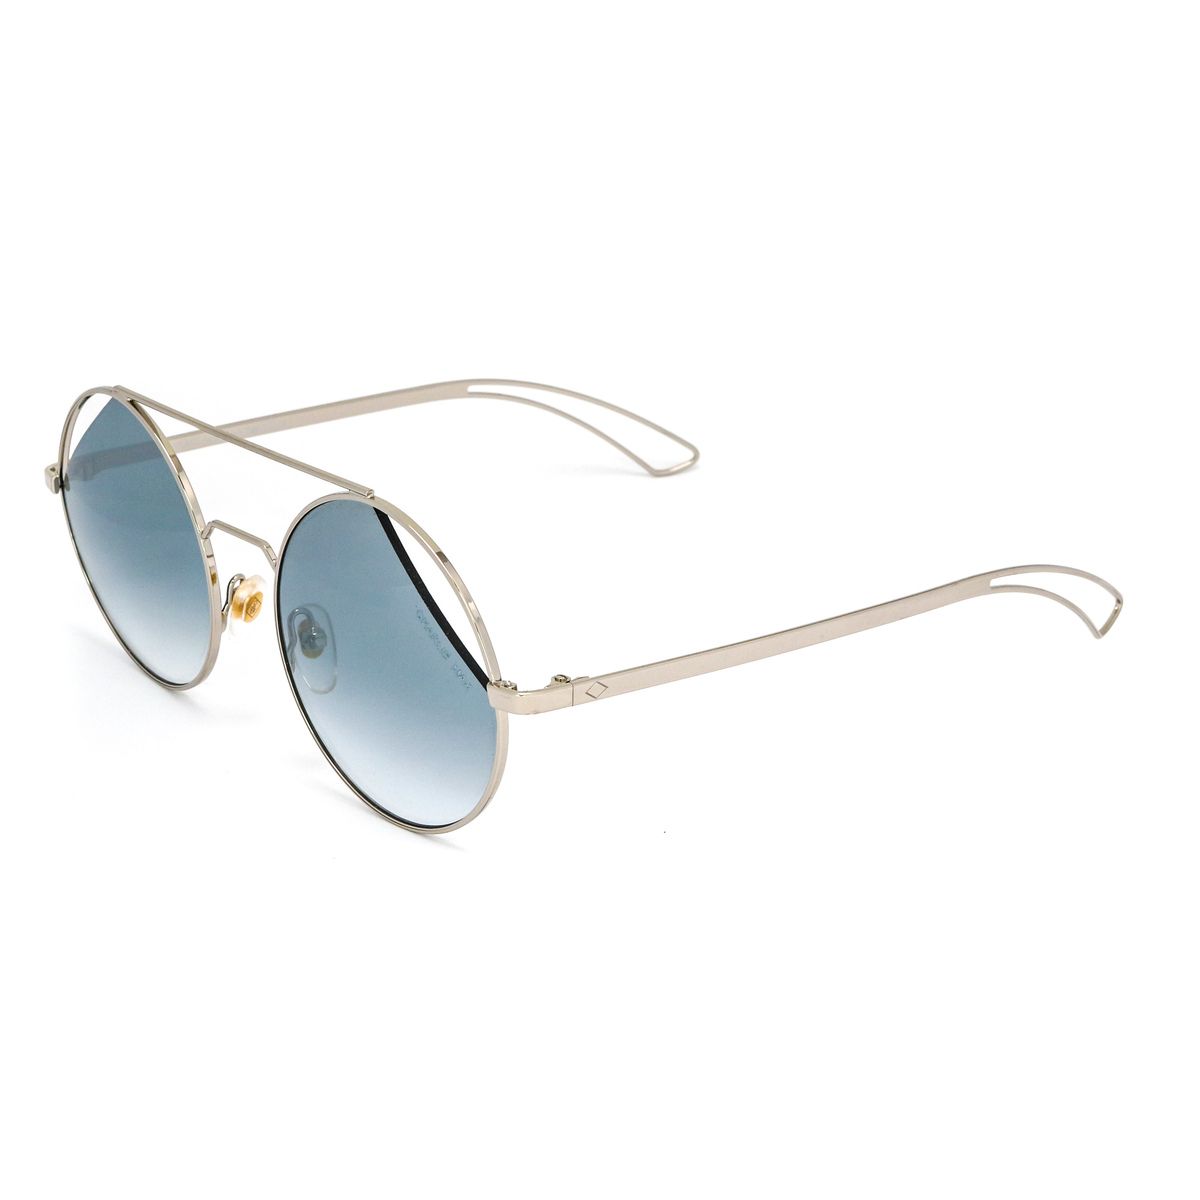 ORNATO Round Sunglasses SL N33 - size 52